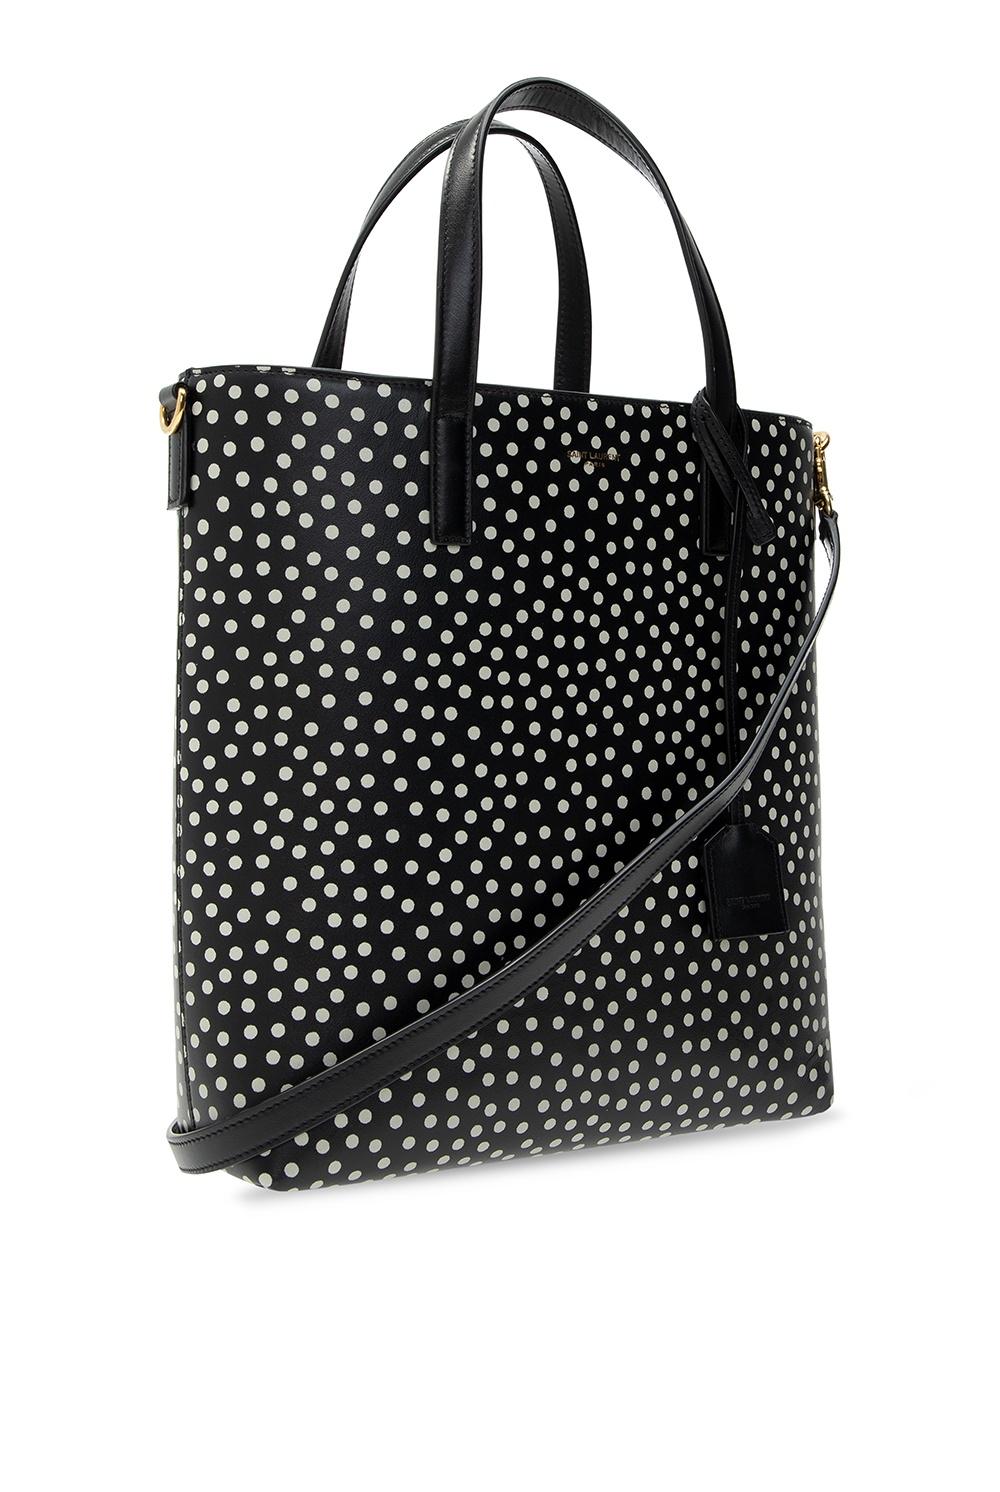 Saint Laurent Soft Leather Black Polka Dot Toy Shopping Bag en vente 1